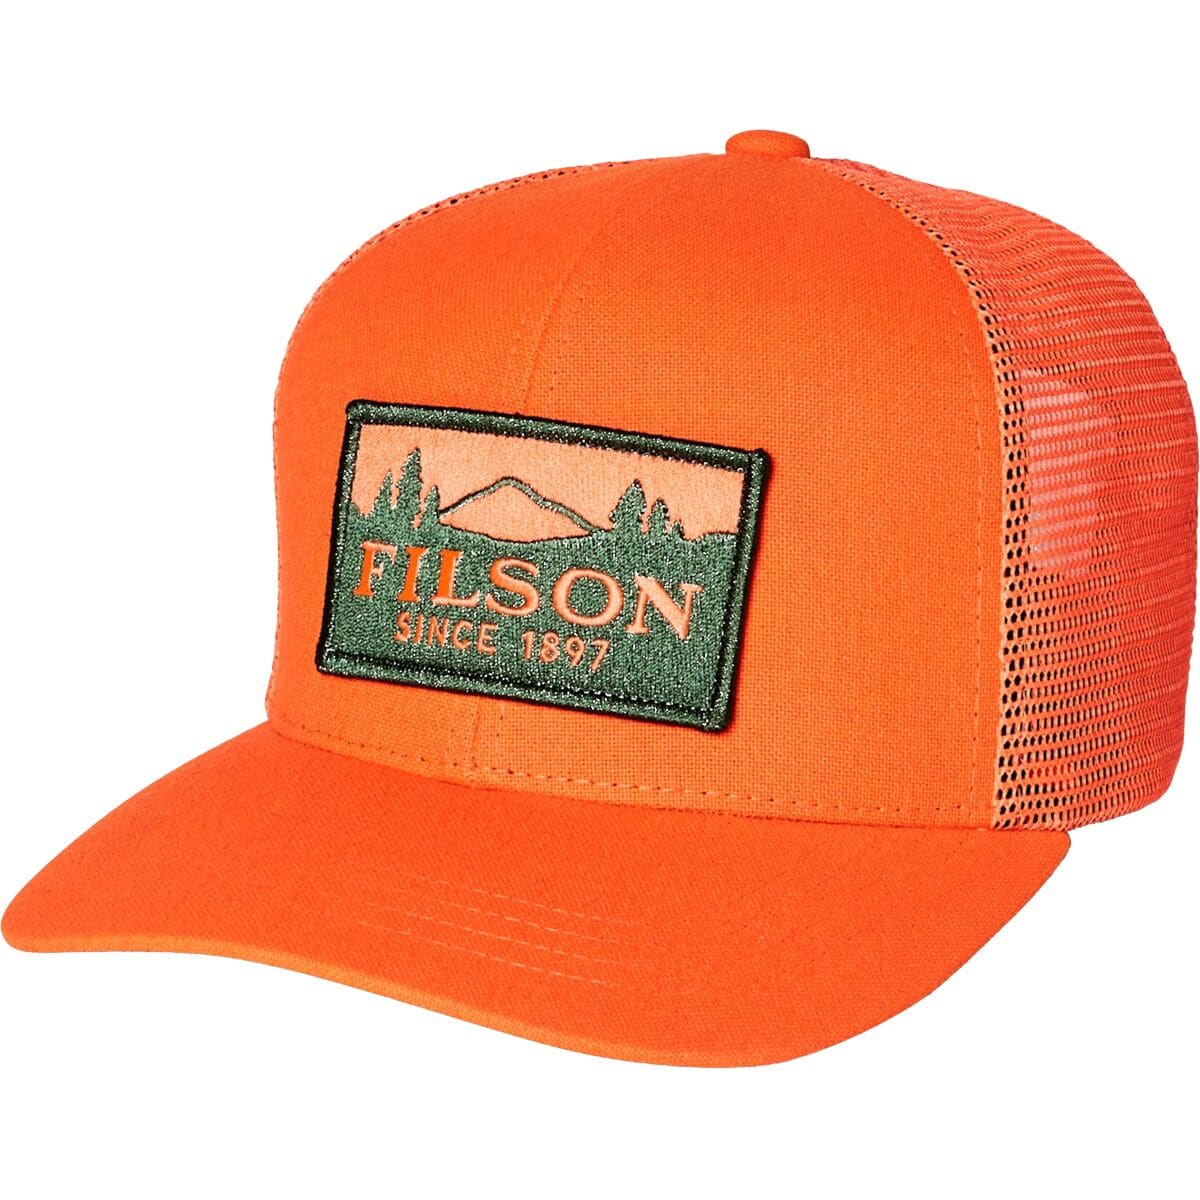 Filson Men's Hats